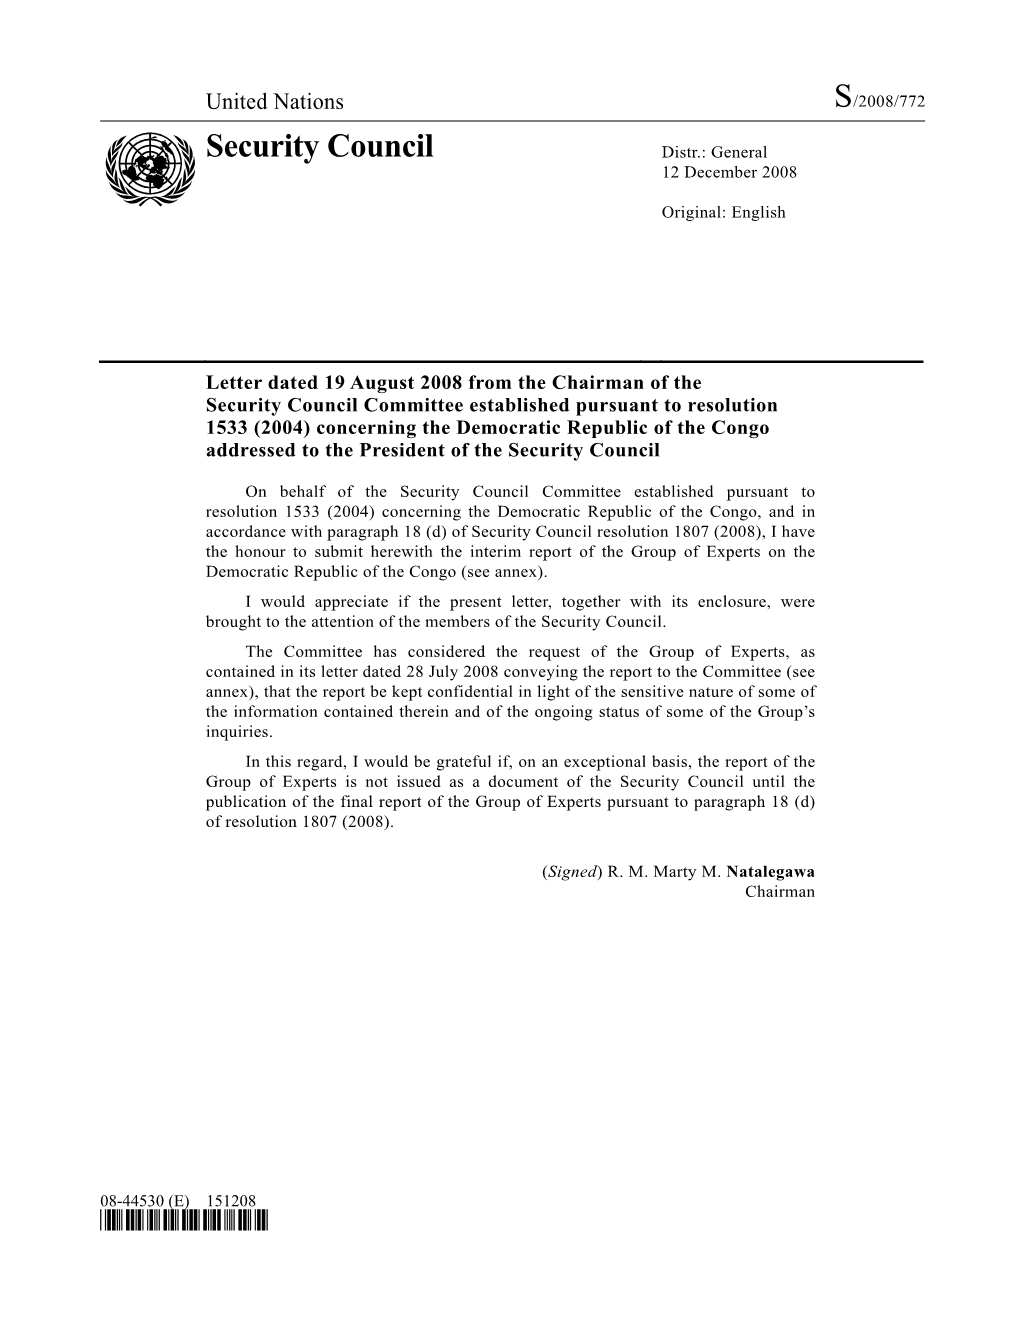 Security Council Distr.: General 12 December 2008